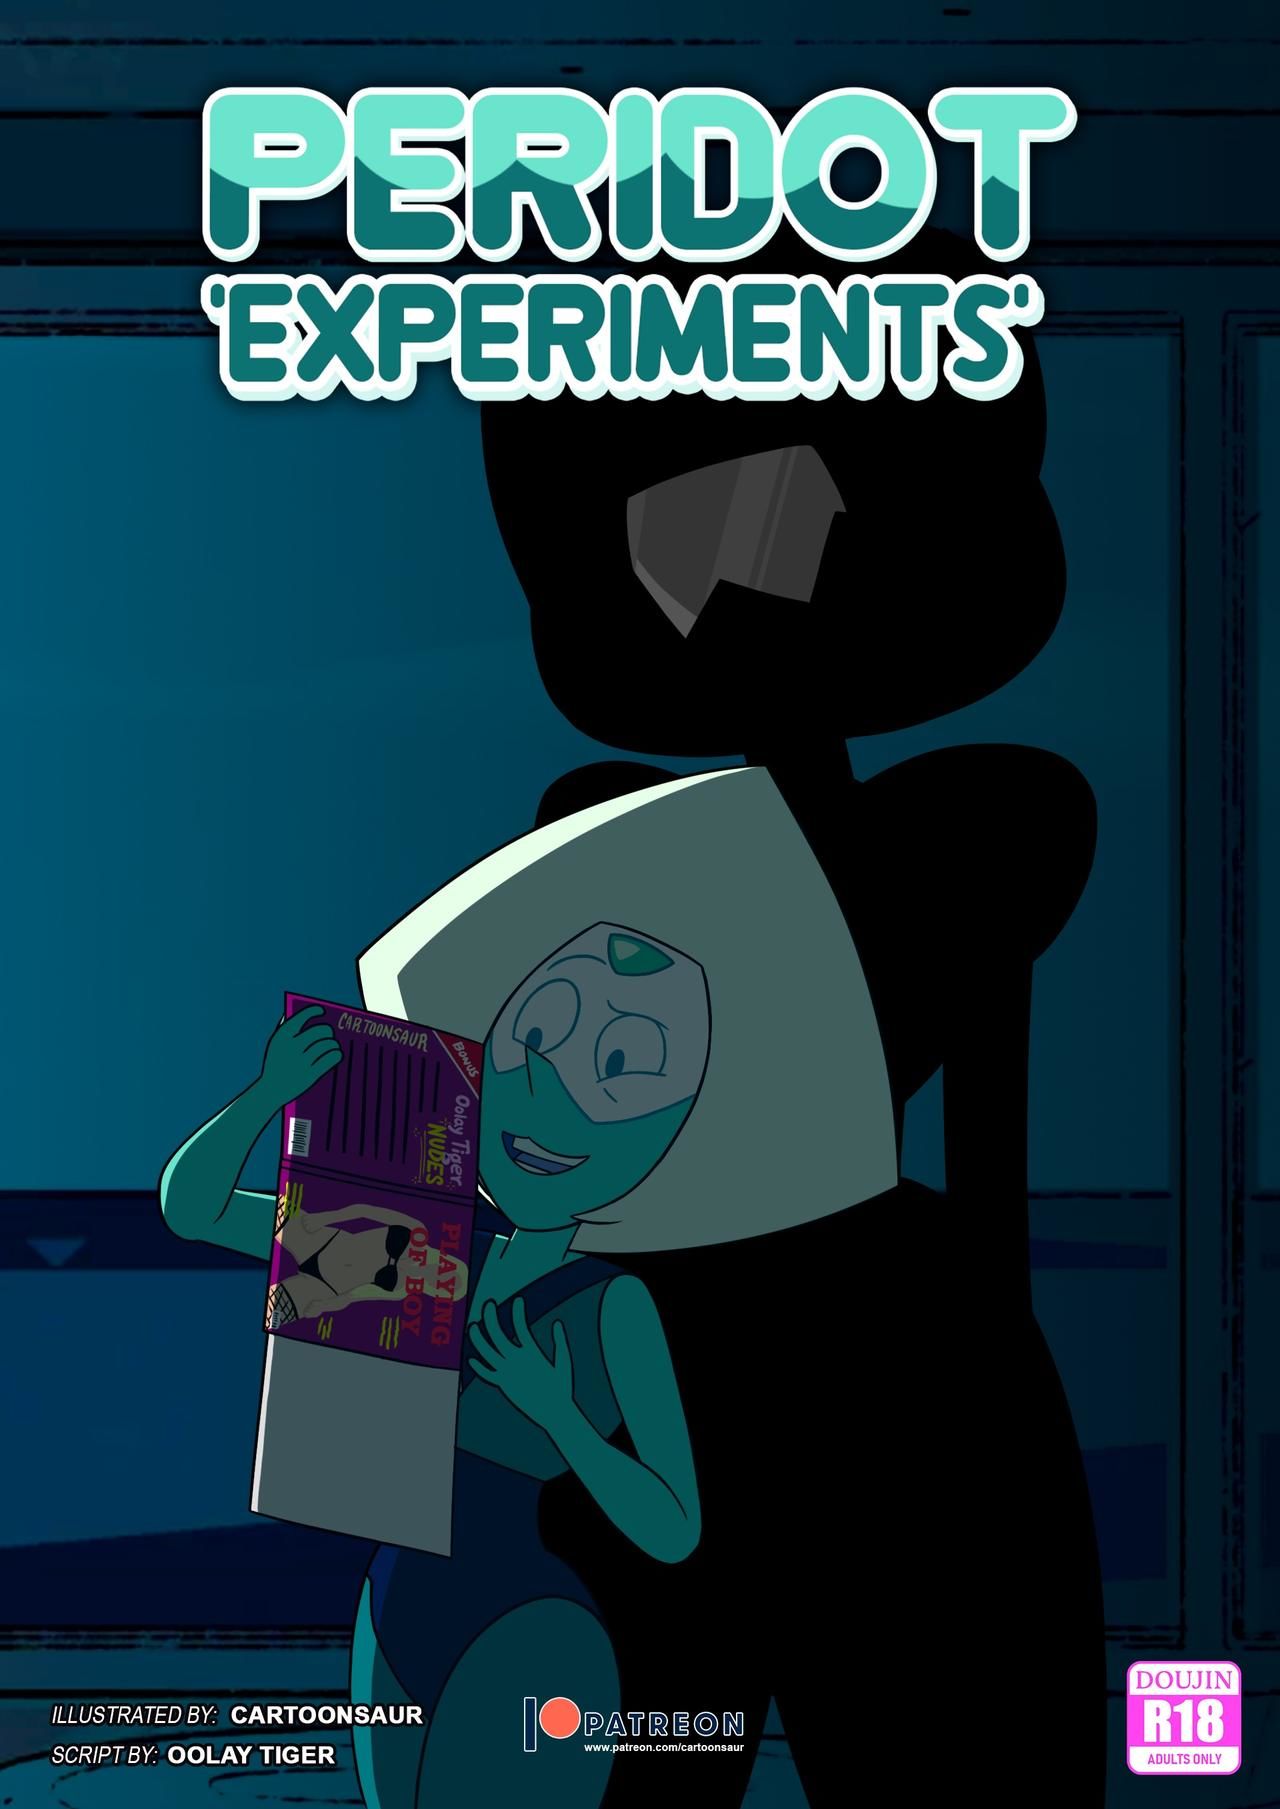 Peridot Experiments (Steven Universe) by Cartoonsaur page 1